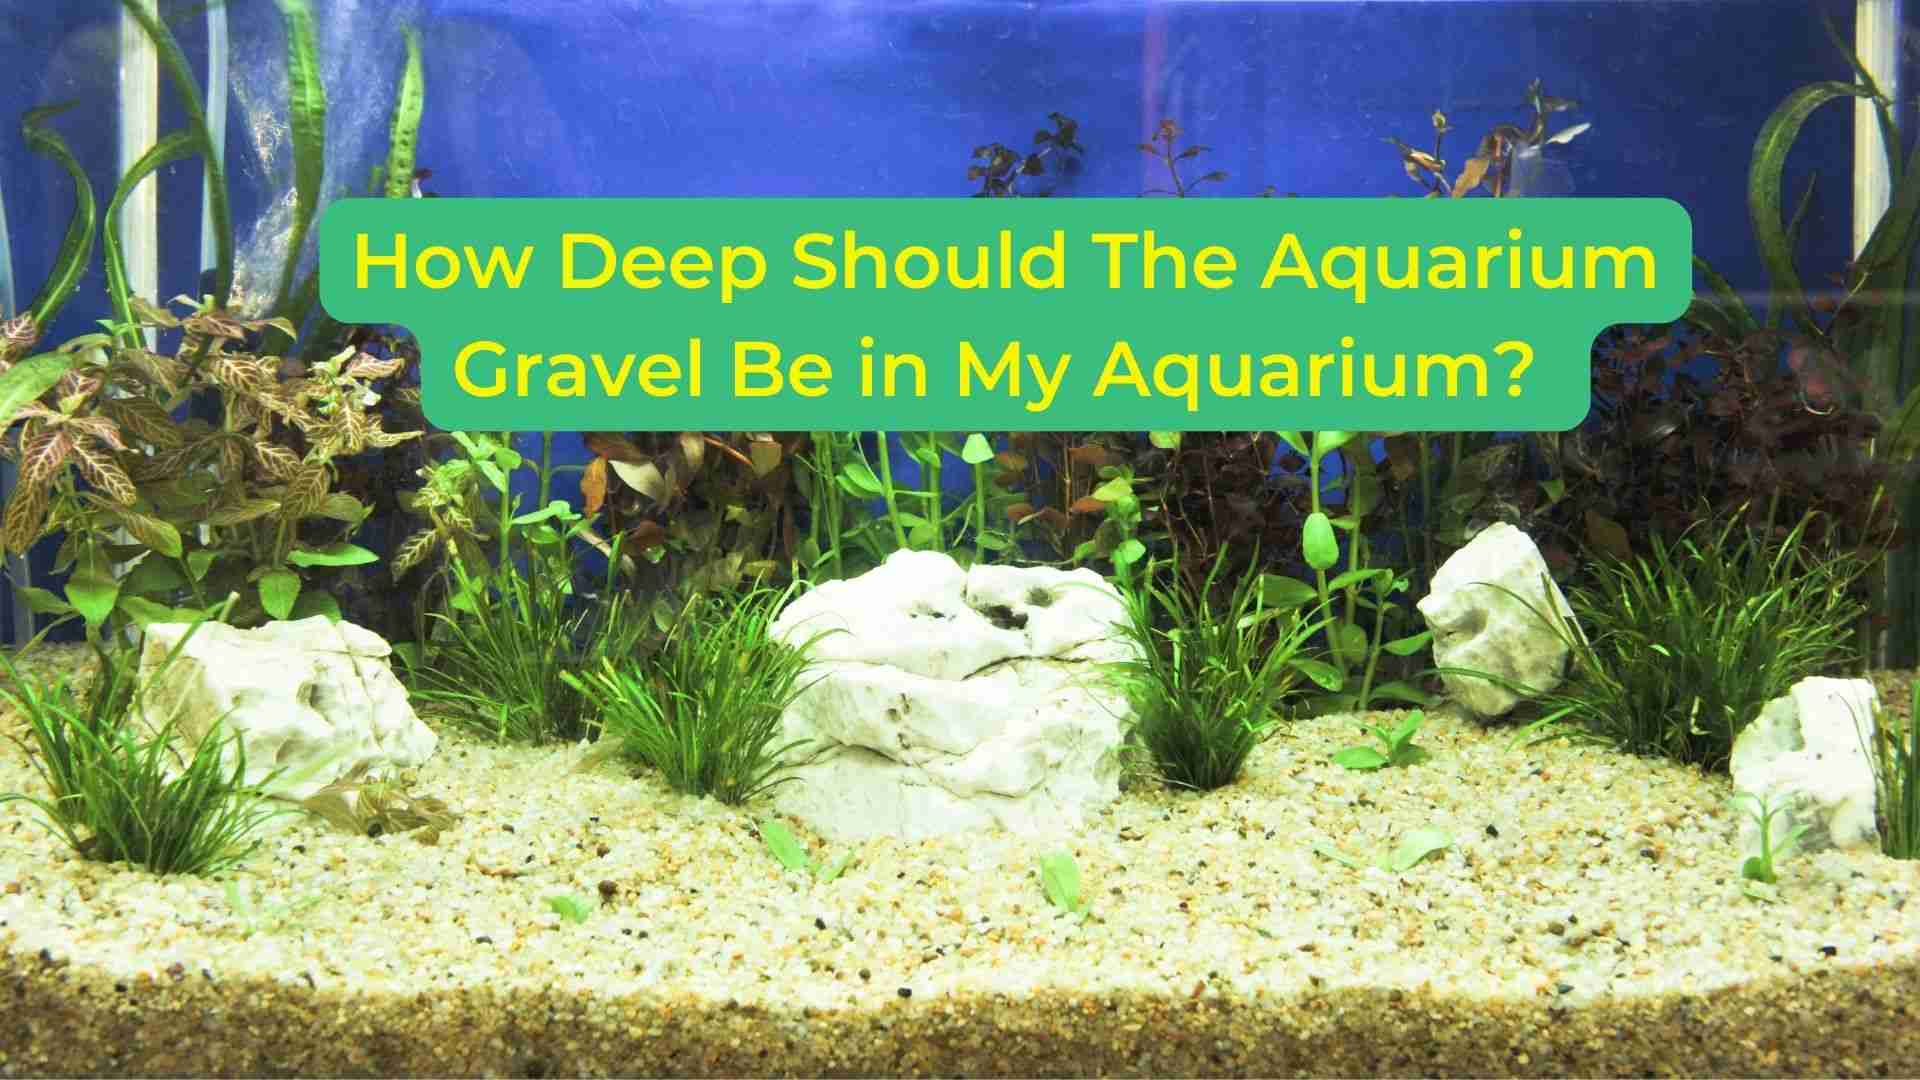 How Deep Should The Aquarium Gravel Be in My Aquarium